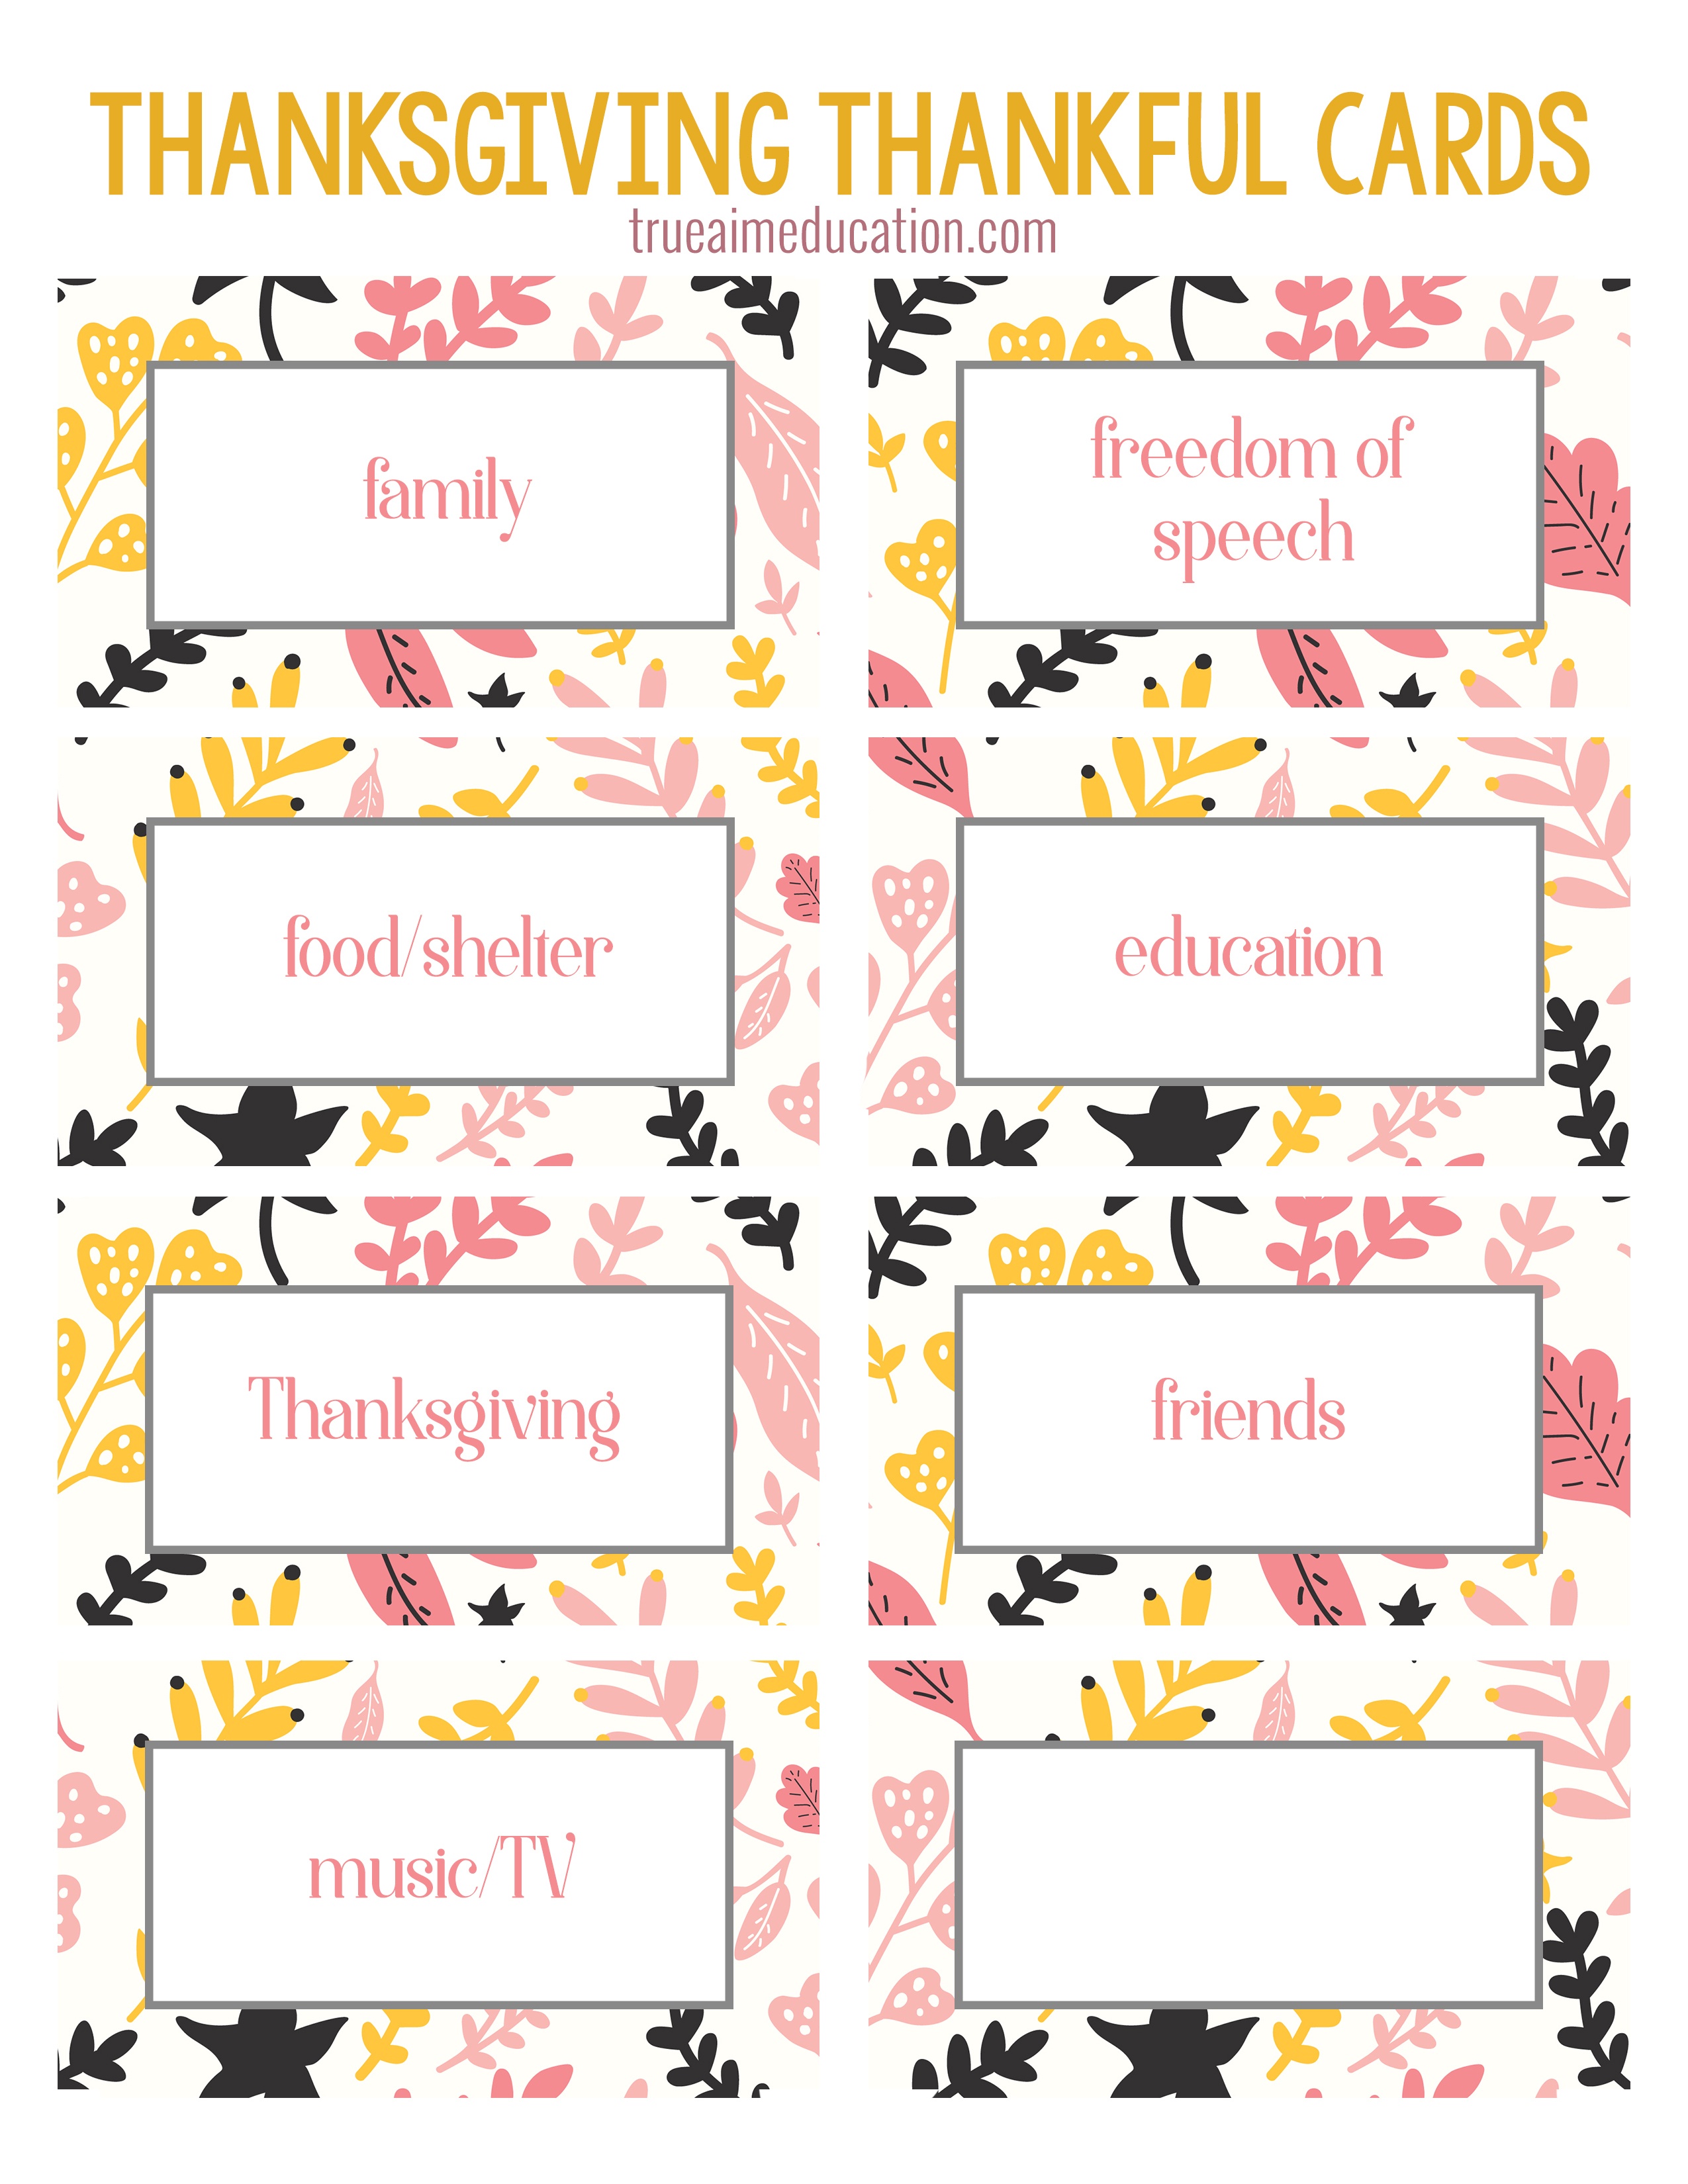 Thanksgiving Thankfulness With Free Printable Cards - Free Printable Thanksgiving Cards